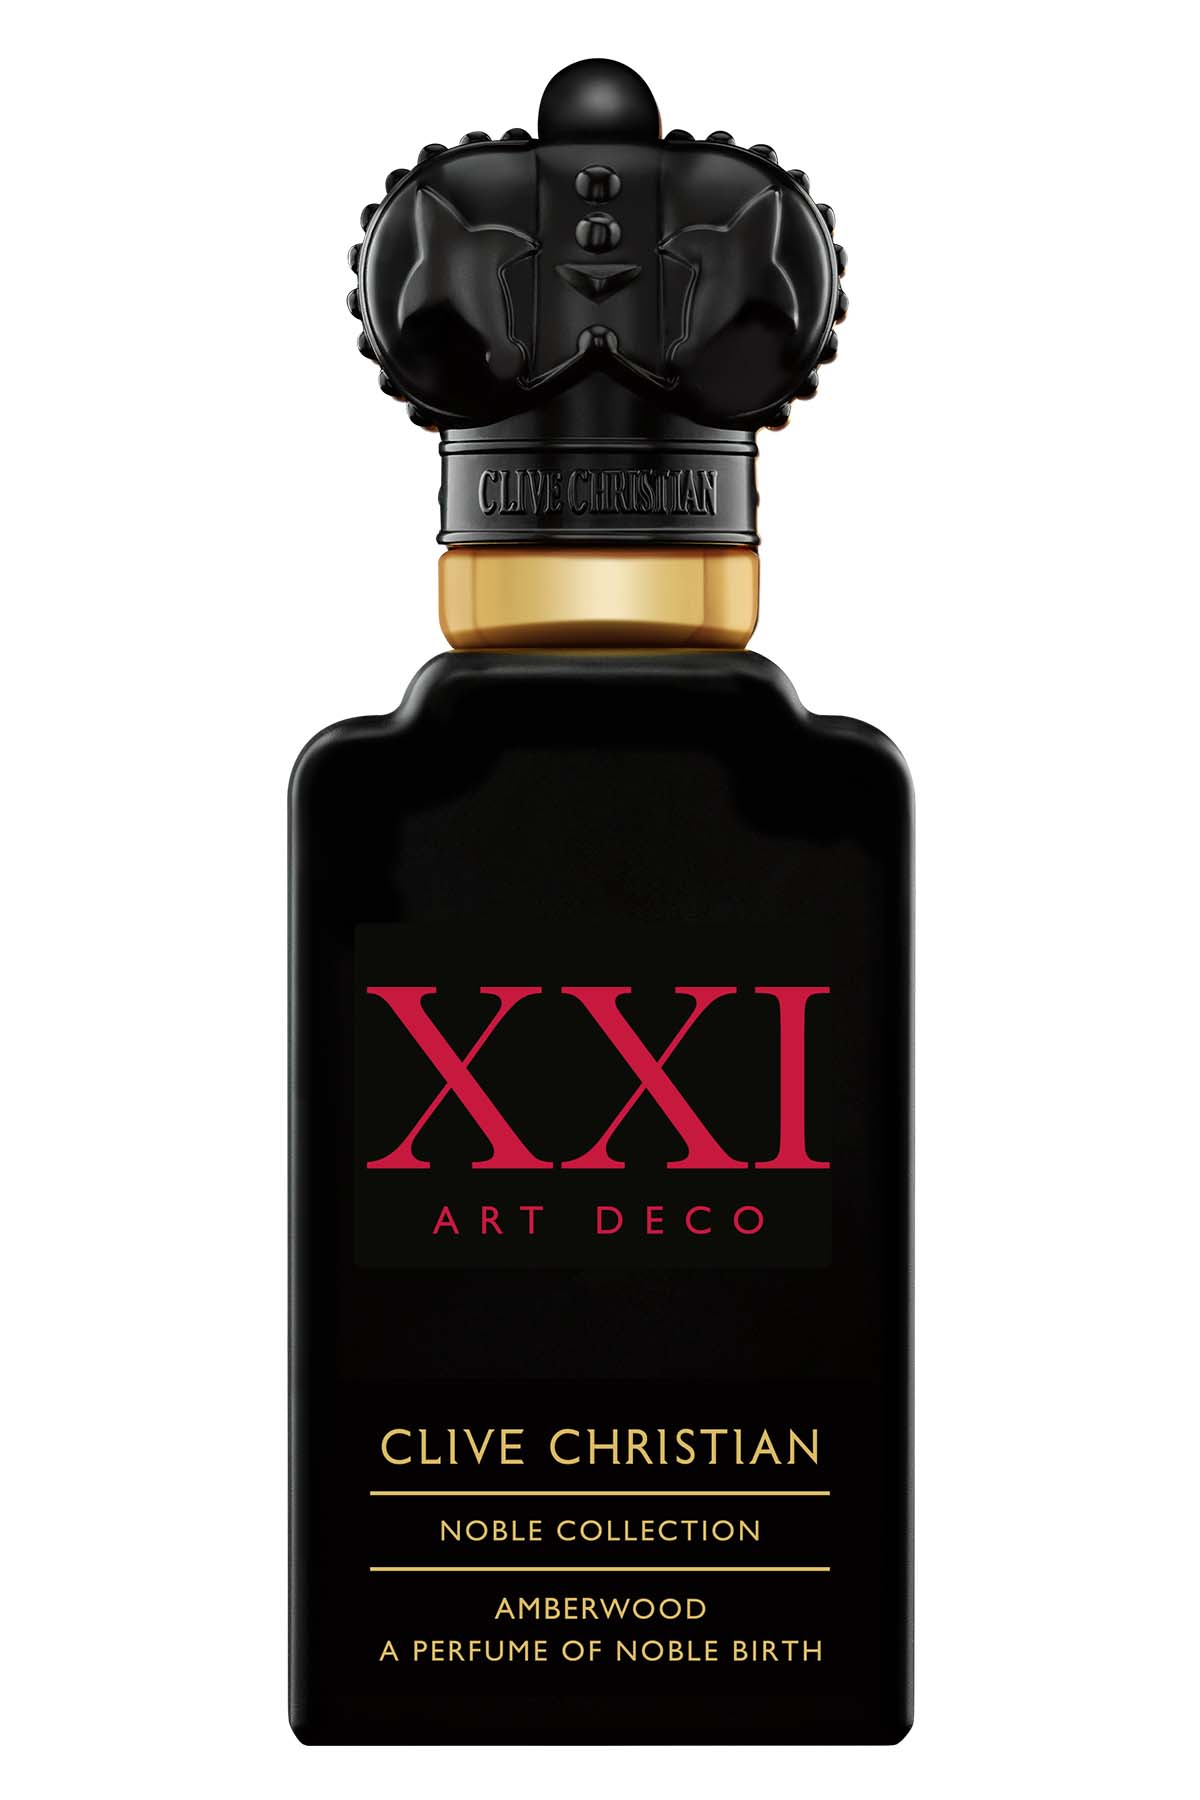 Clive Christian Art Deco Amberwood Eau de Parfum